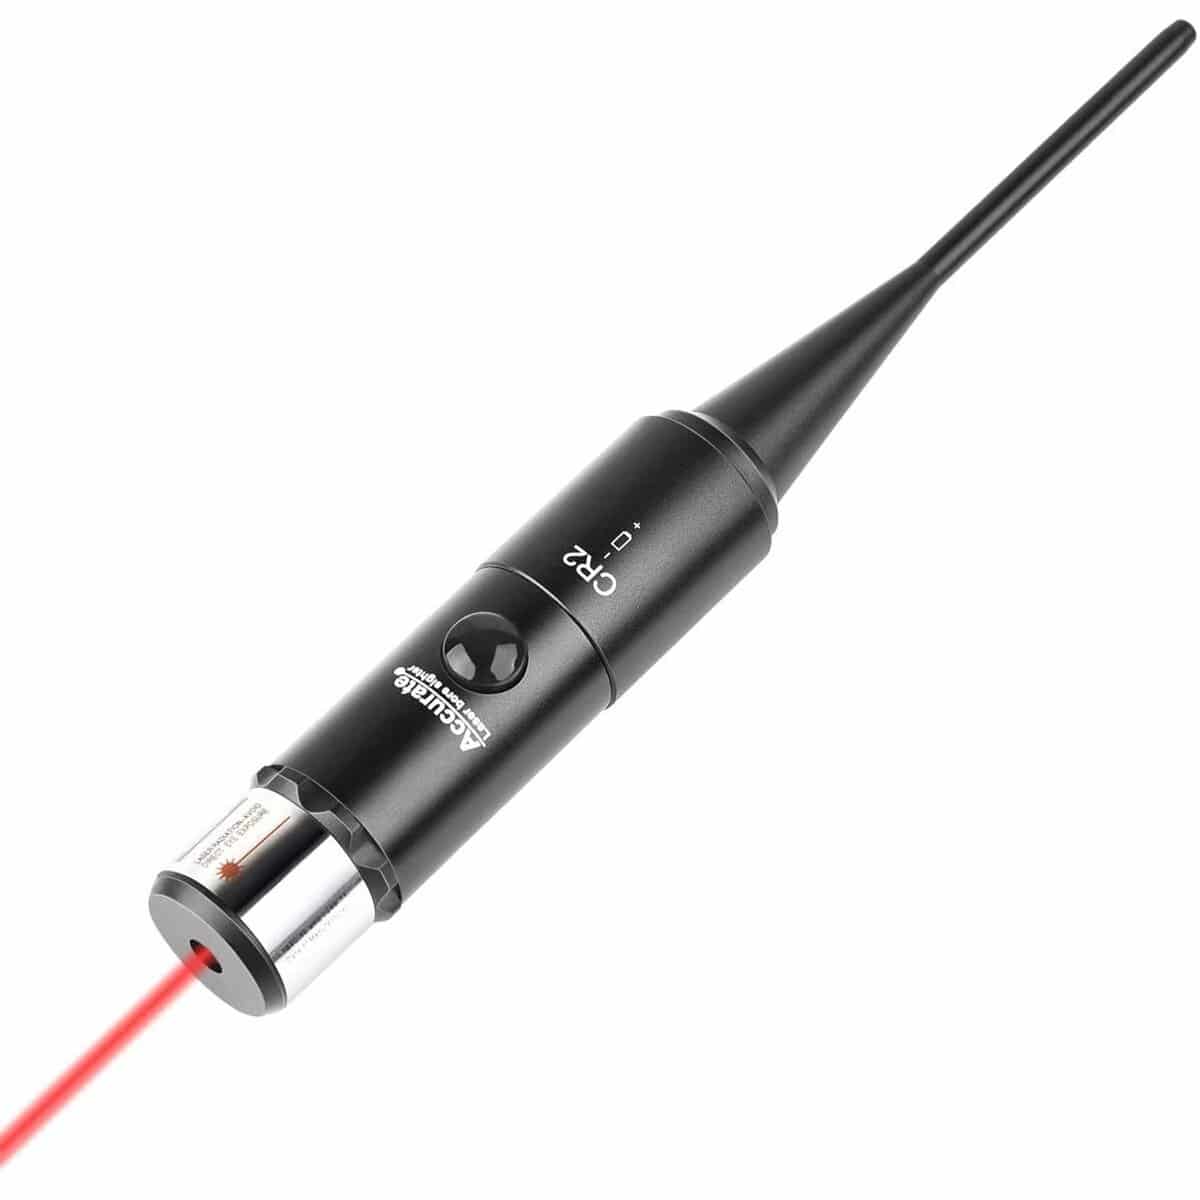 UltraSight Adjustable Red Laser Bore Sighter